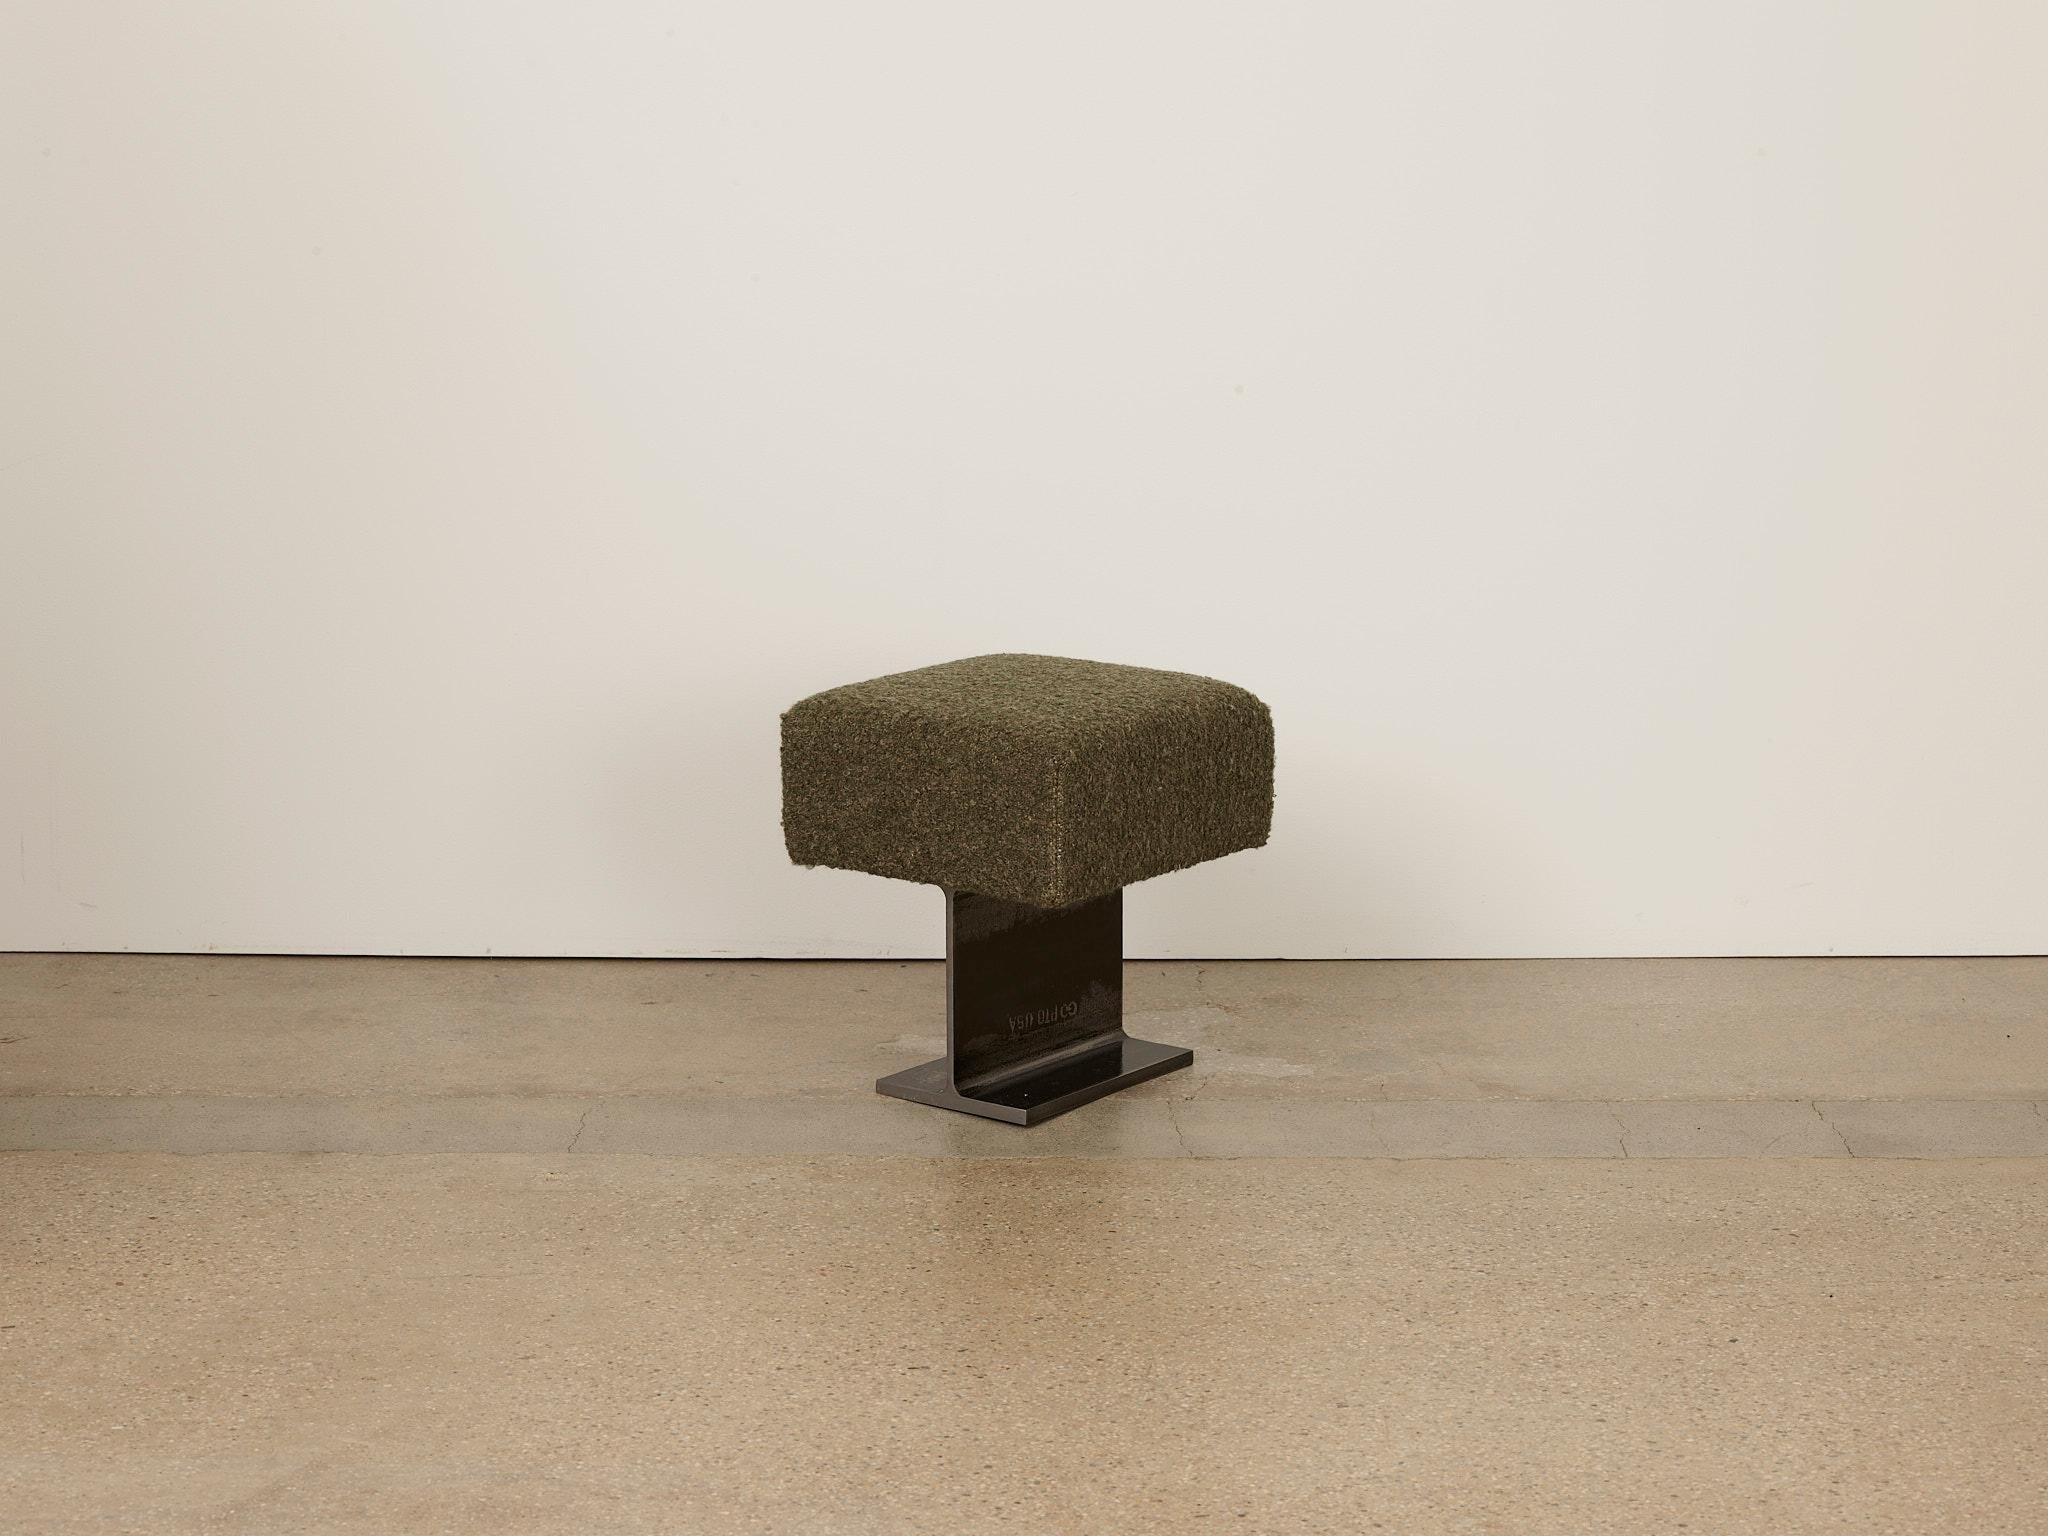 Trono Block brown chair by Umberto Bellardi Ricci
Dimensions: D 14.5